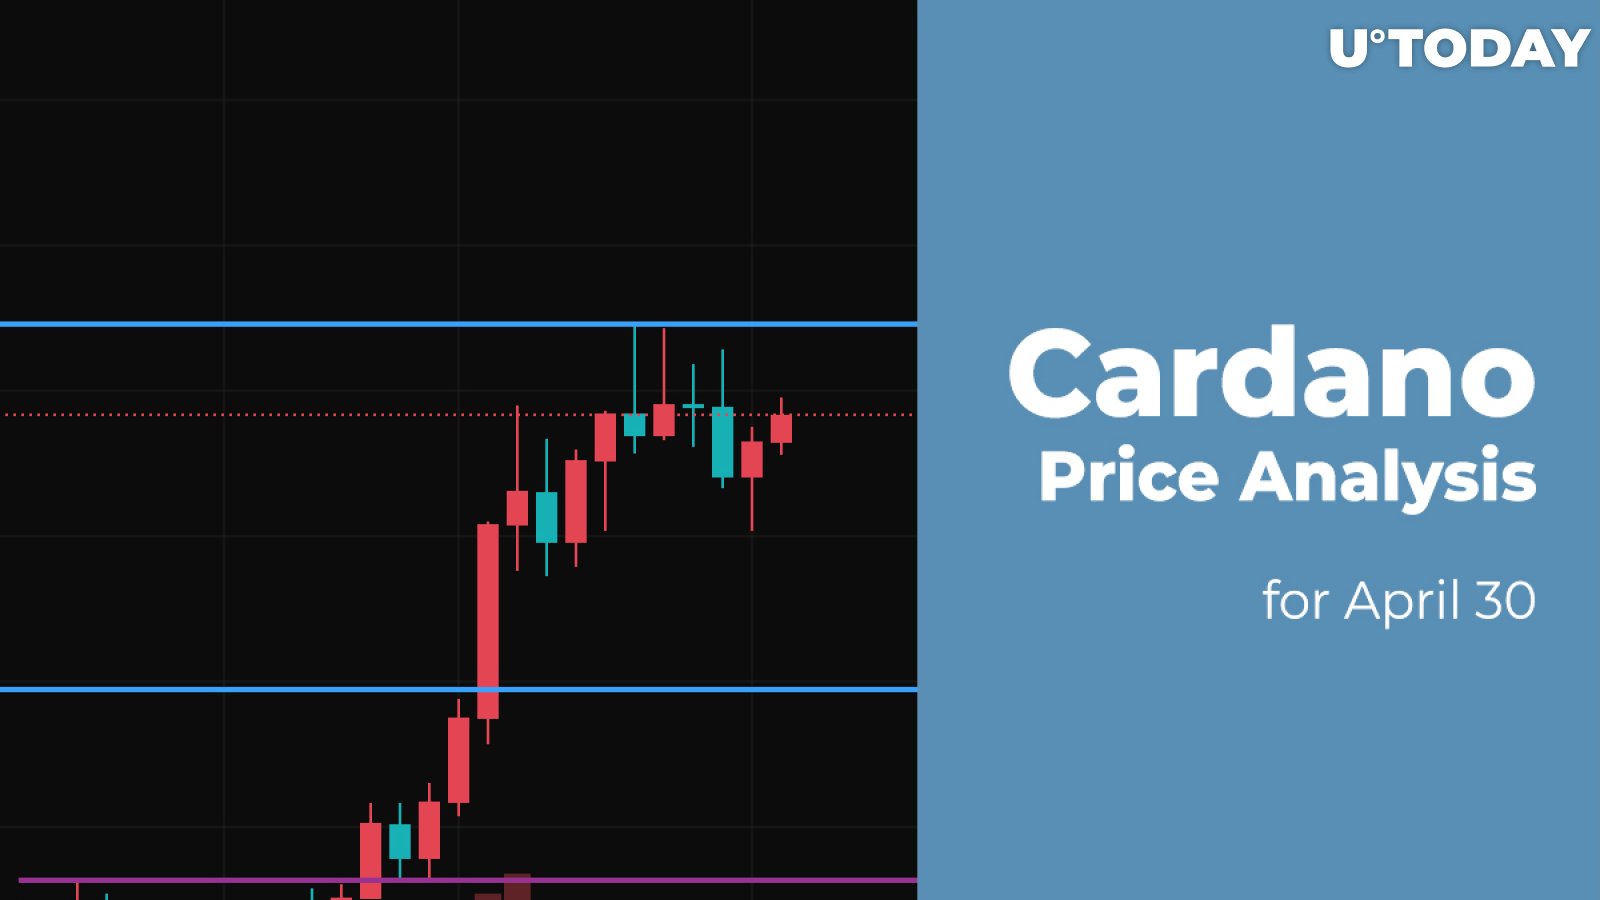 Cardano (ADA) Price Analysis for April 30